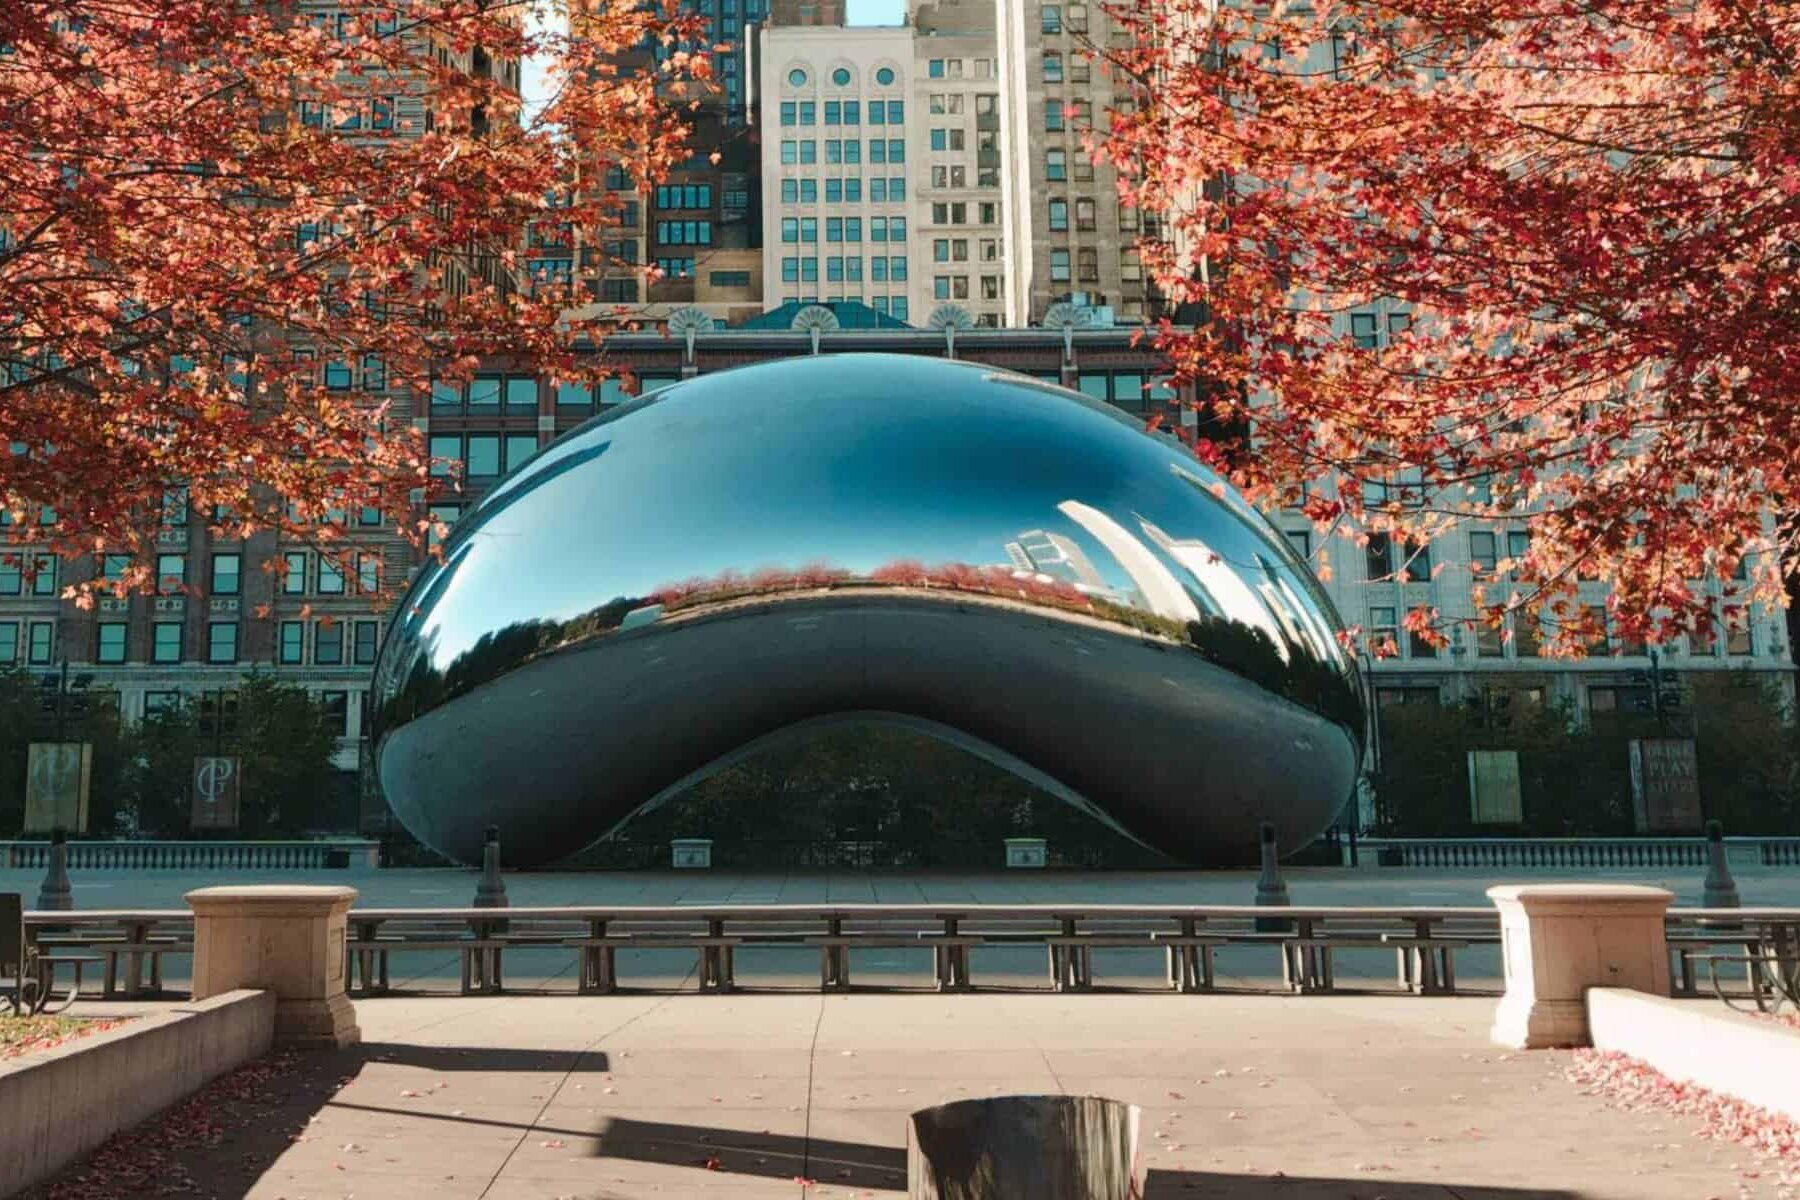 Una imagen del famoso frijol de Chicago.